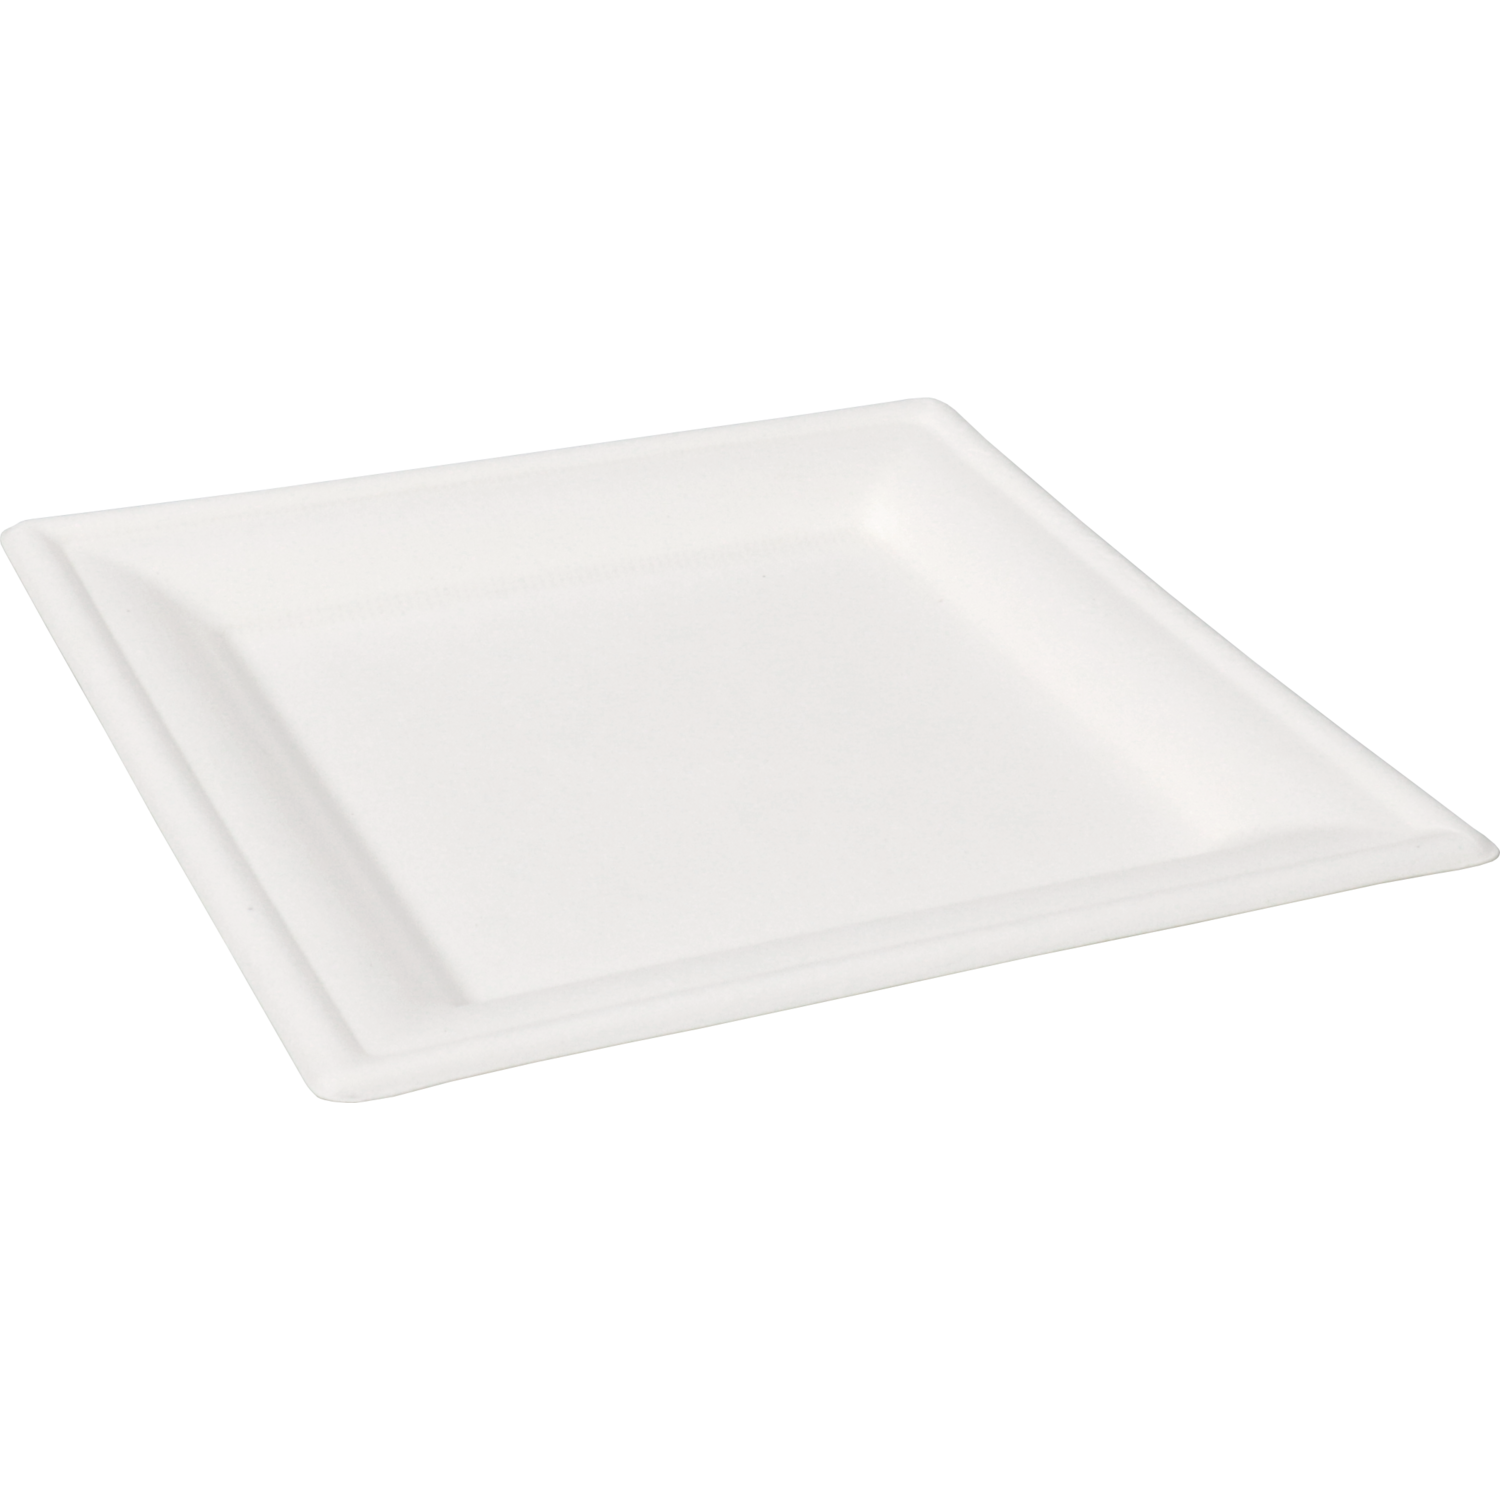 Depa® Plate, square, 1 compartment, bagasse (sugarcane pulp), 16x16cm, white 1